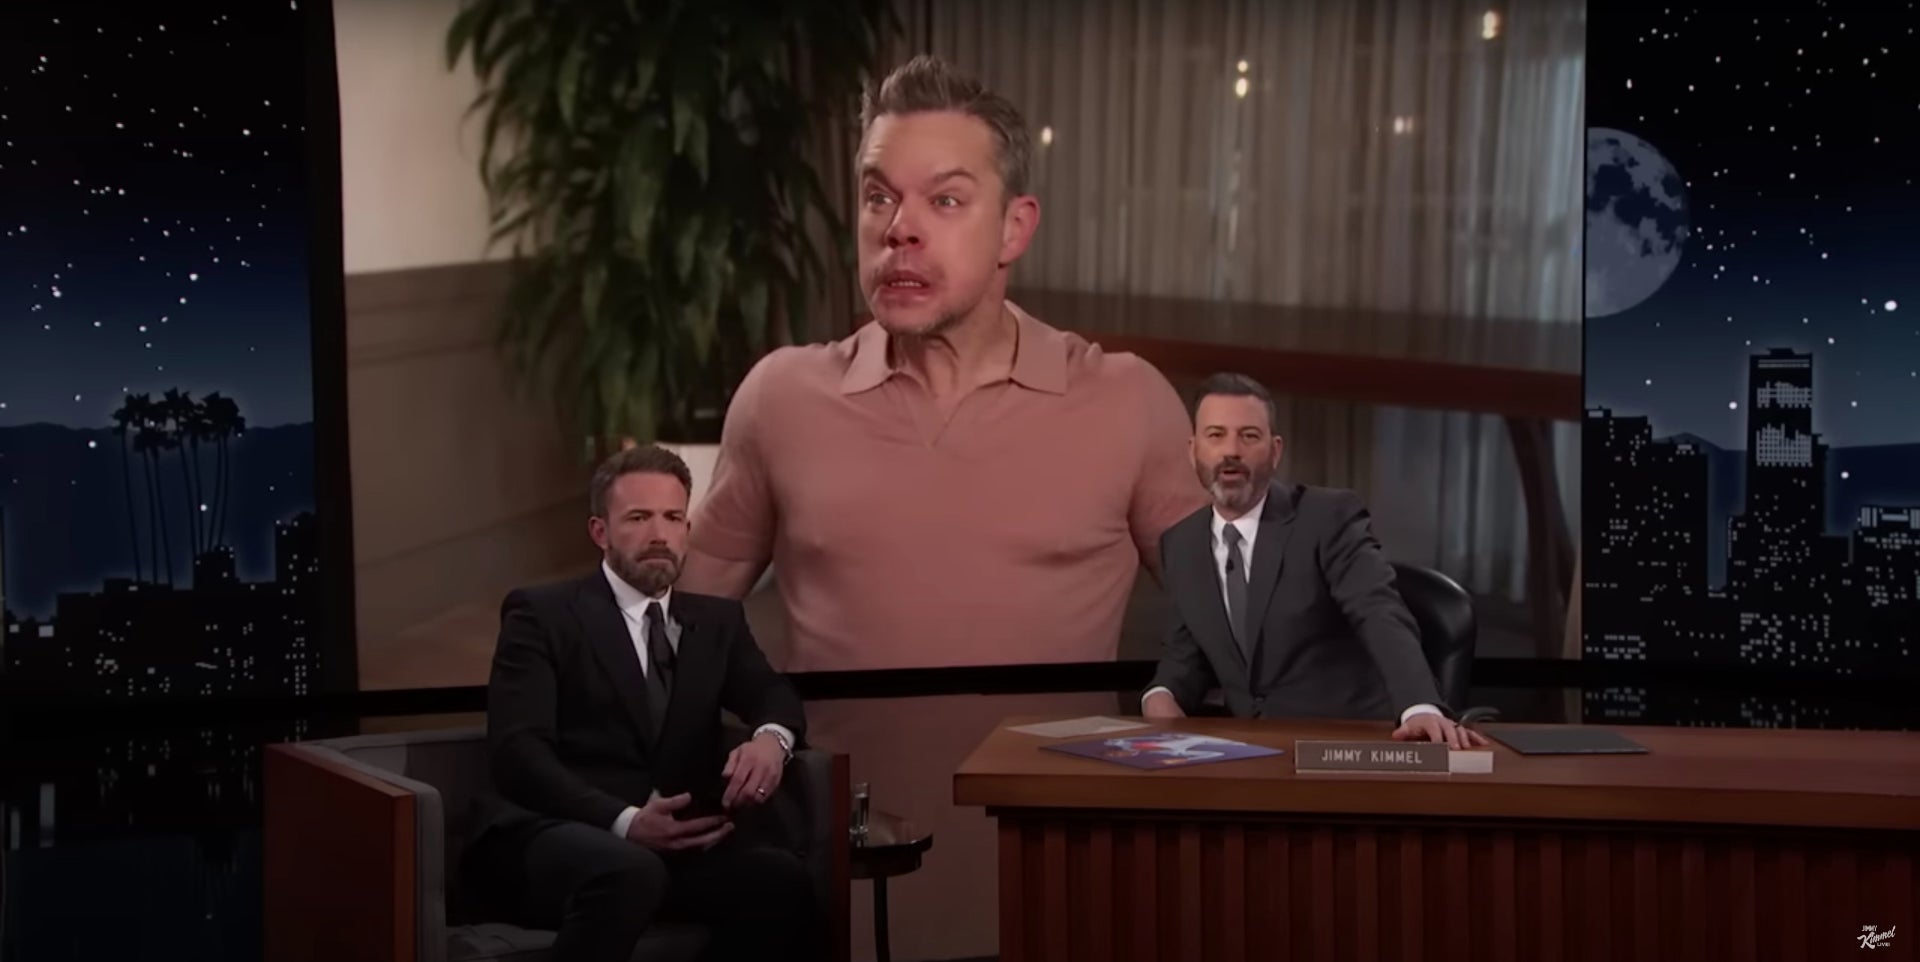 Matt Damon appears via video while Jimmy Kimmel interviews Ben Affleck for his new movie "Air."